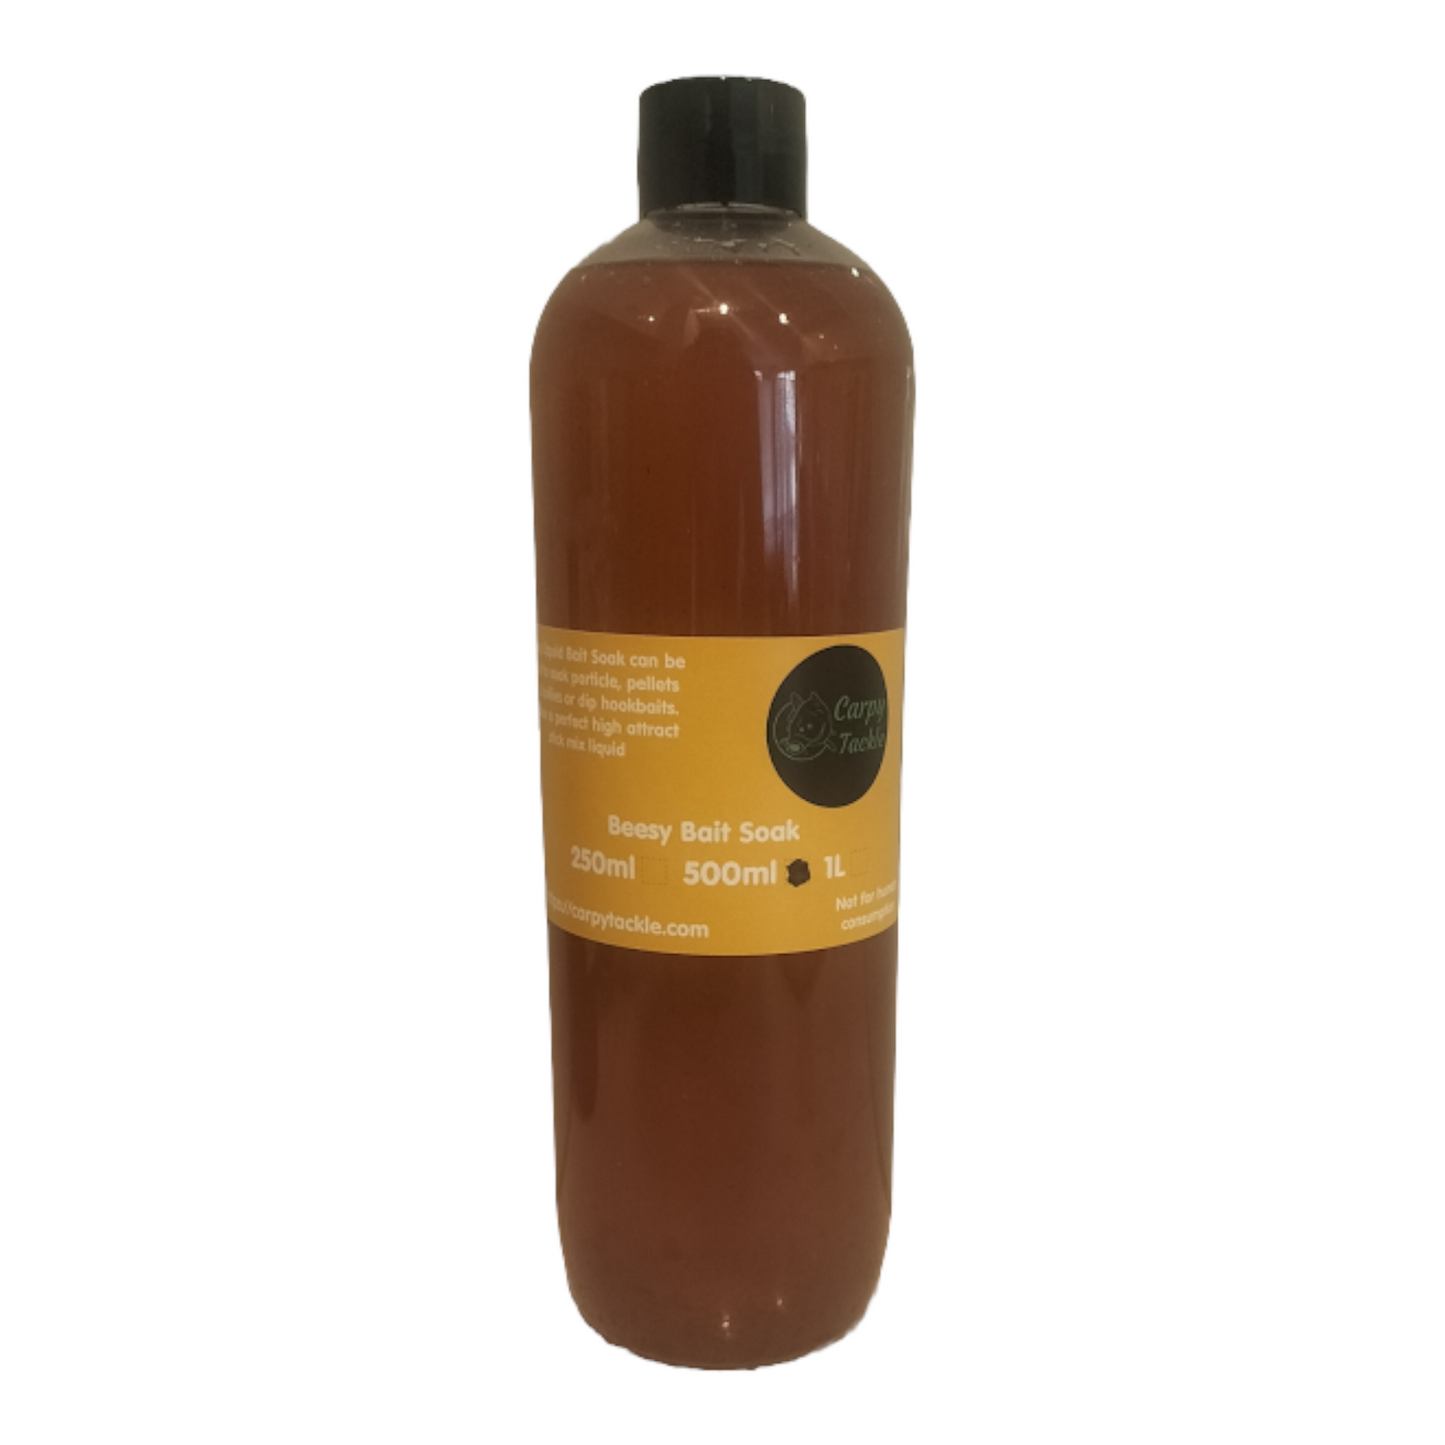 Beesy Liquid Bait Soak/Glug 250ml/500ml/1L